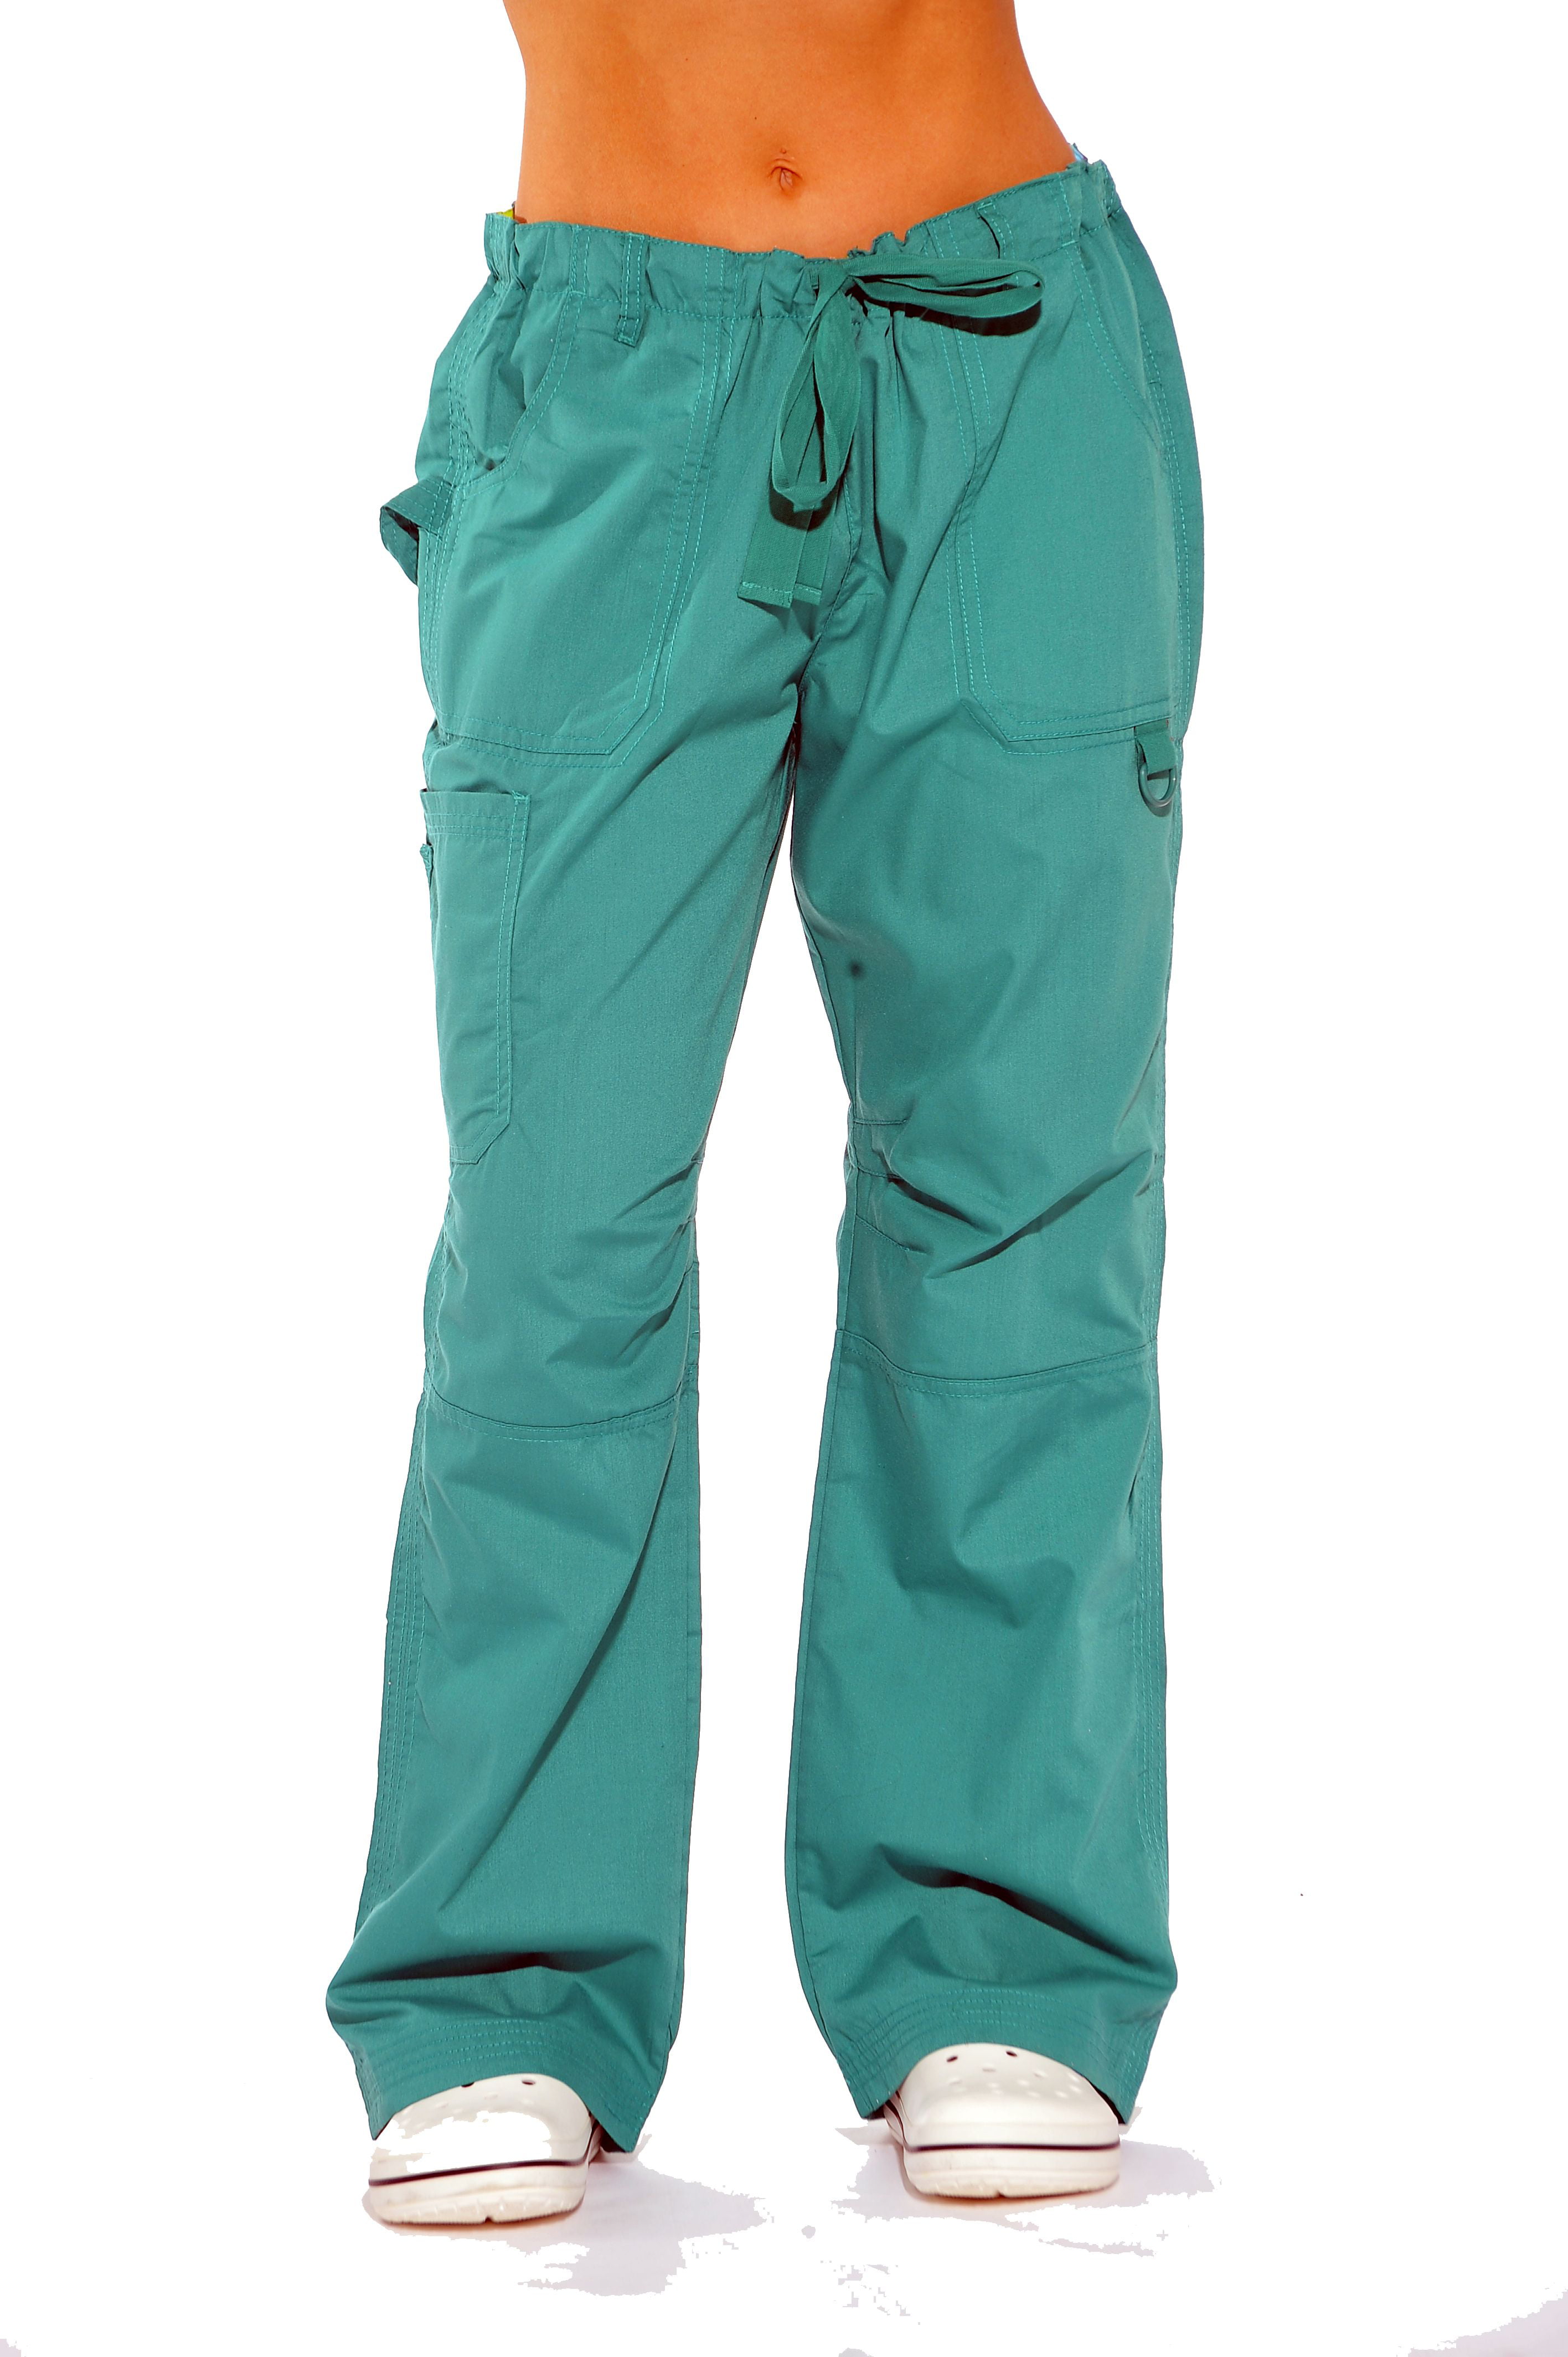 Scrubs Pants White 5 pocket Cargo Elastic Waist Delta Uniforms 